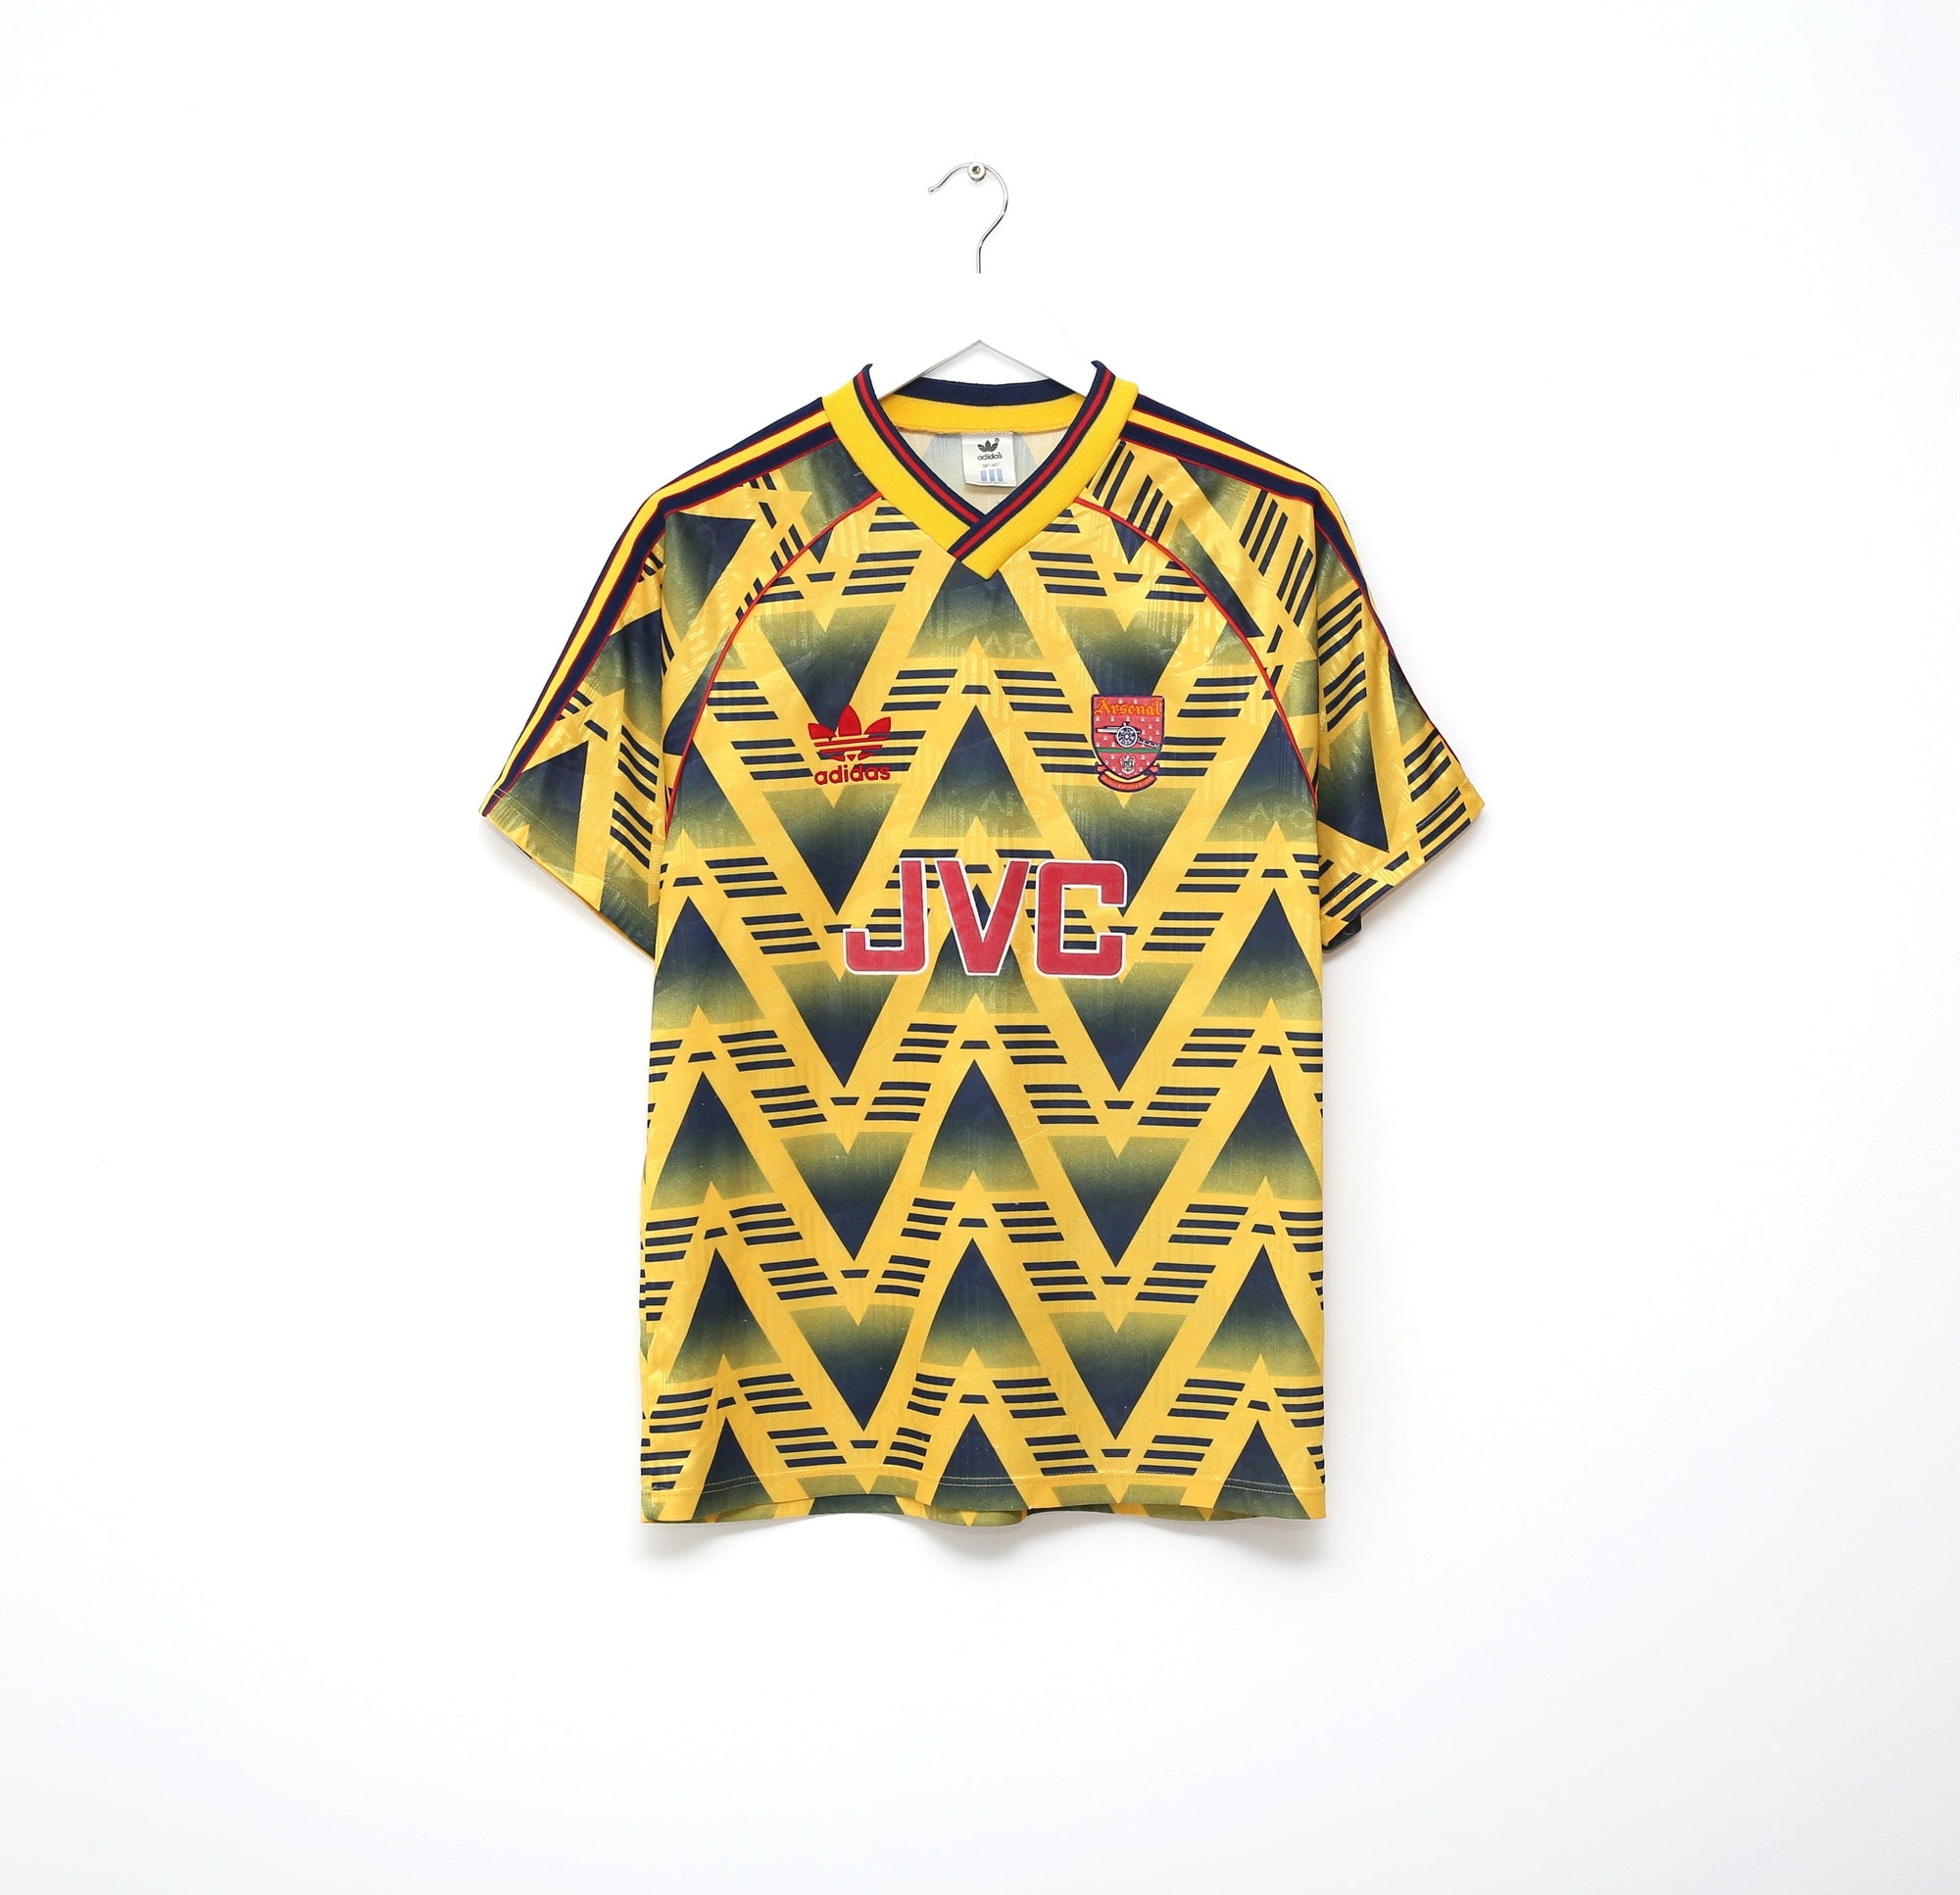 Retro Arsenal Away Jersey 1992/93 By Adidas